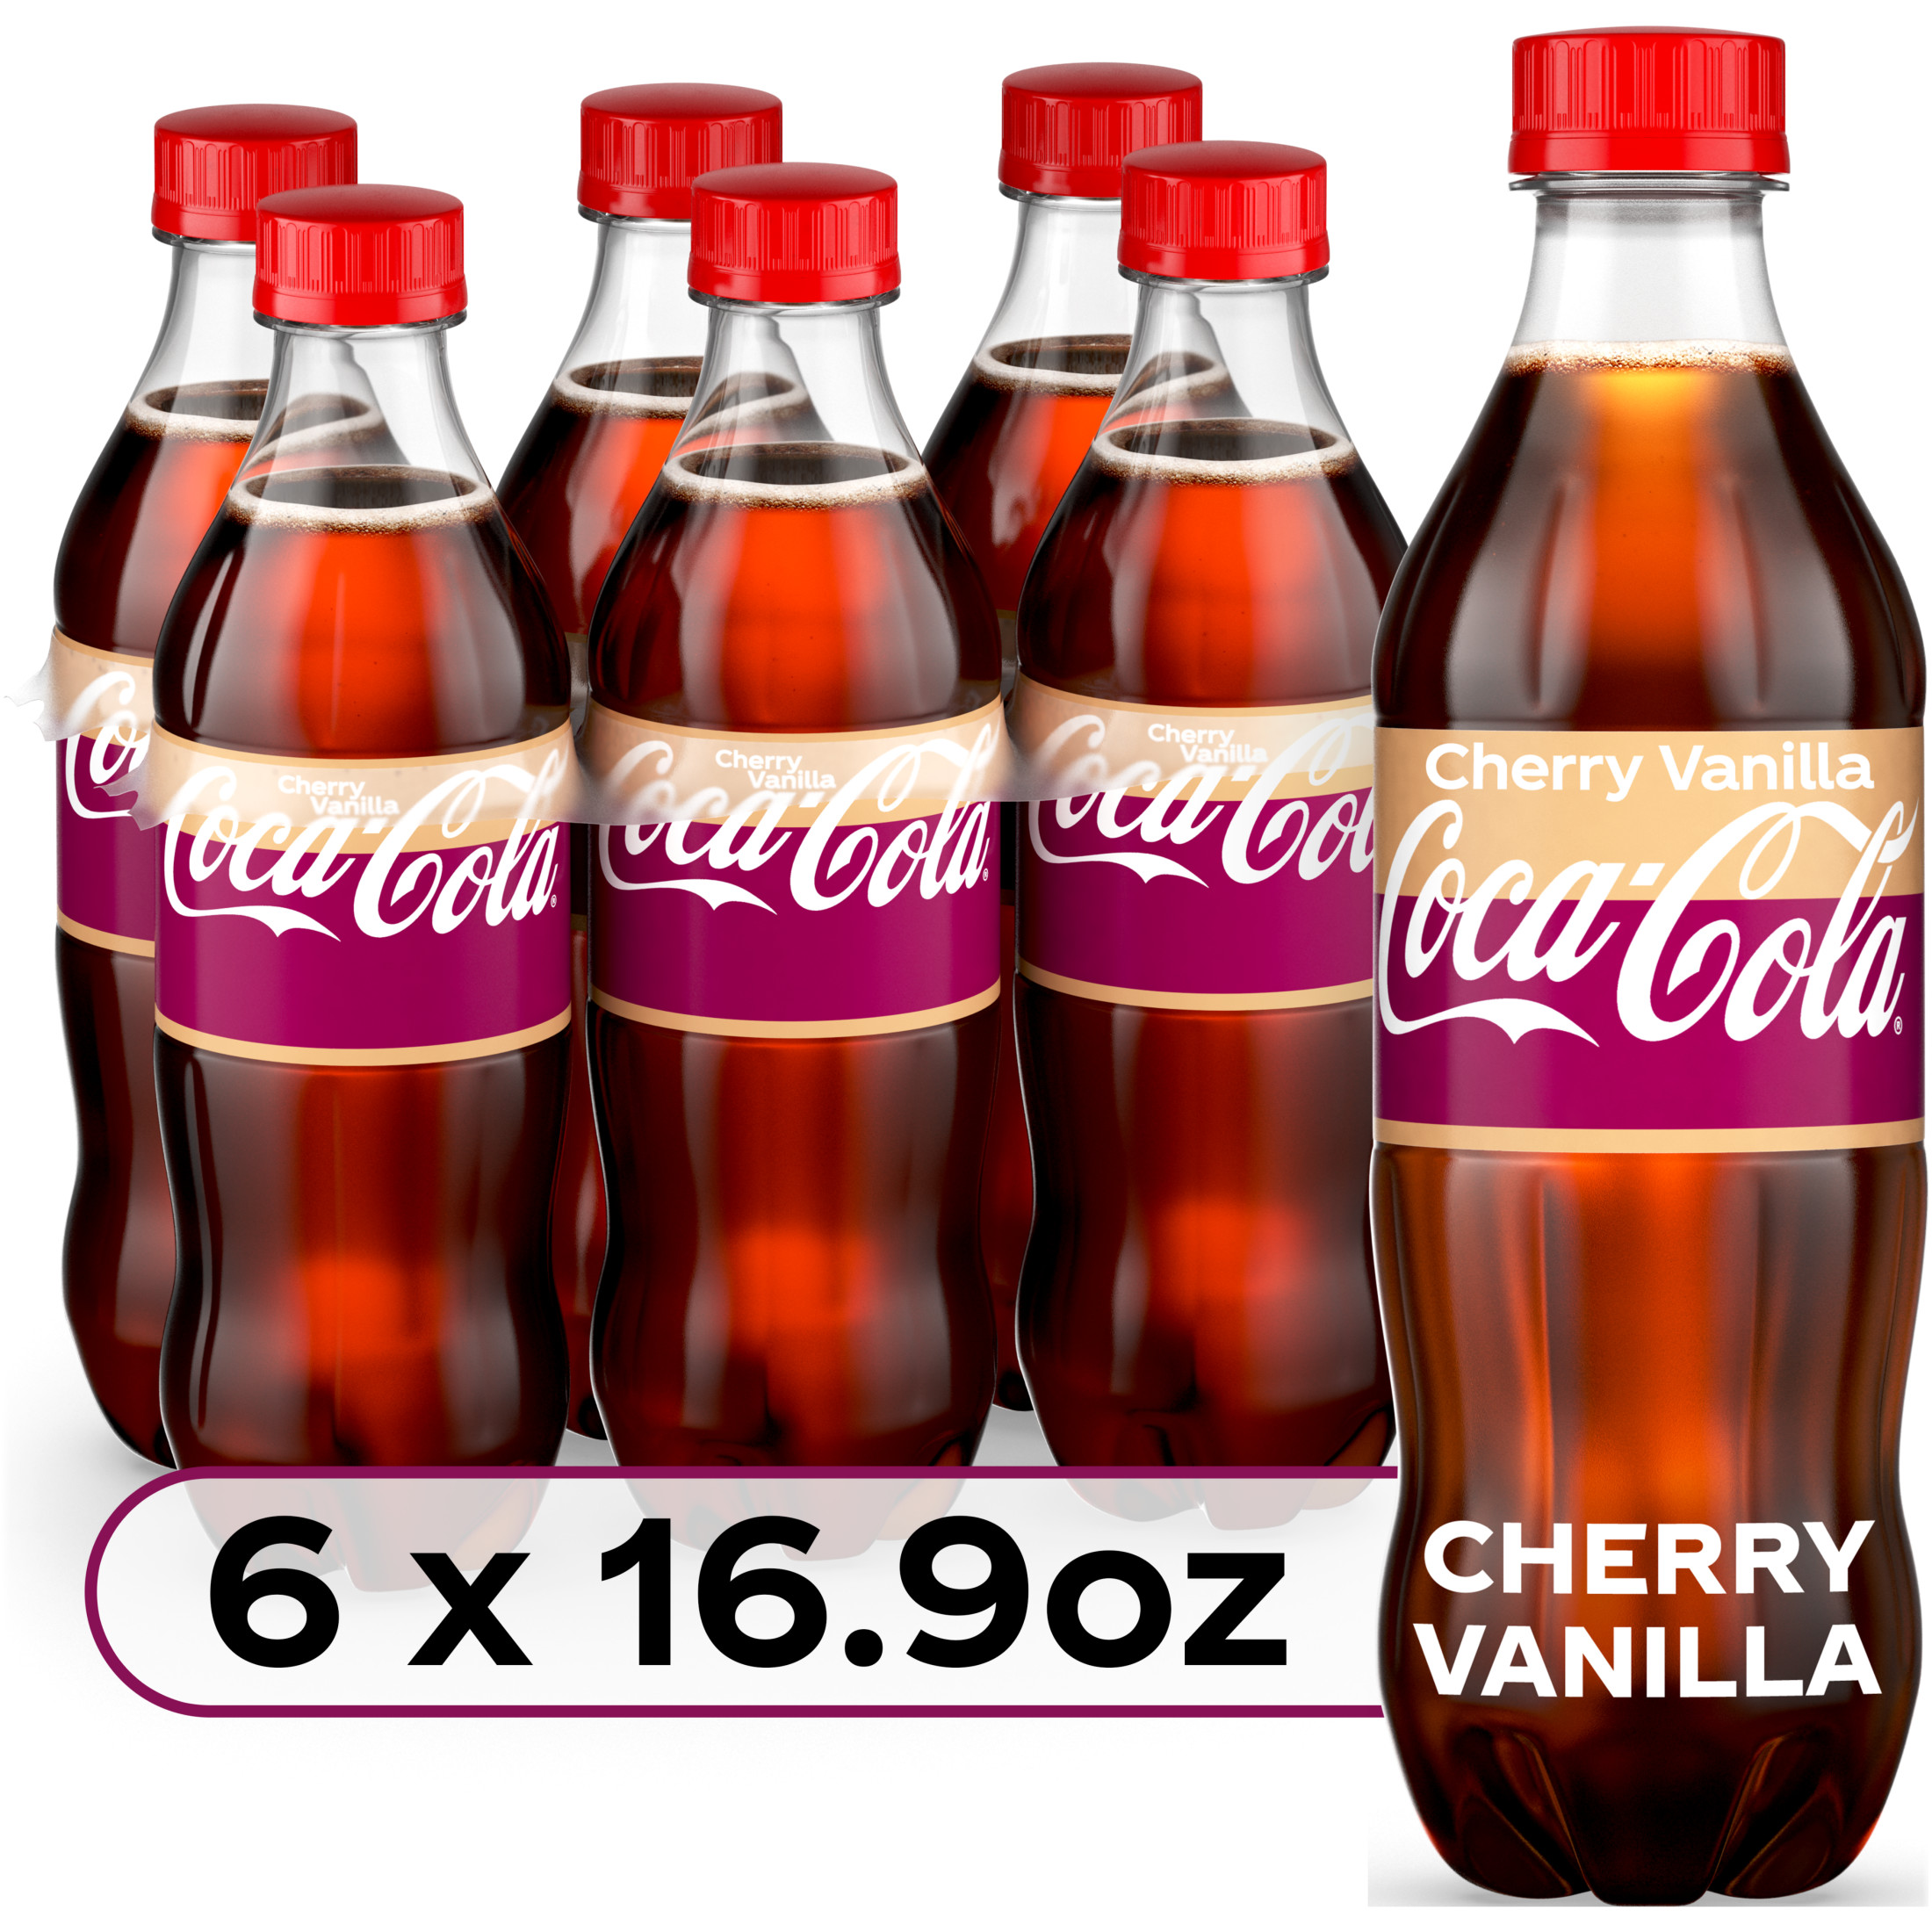 Coca-Cola Cherry Vanilla Soda Pop, 16.9 fl oz, 6 Pack Bottles - image 1 of 7